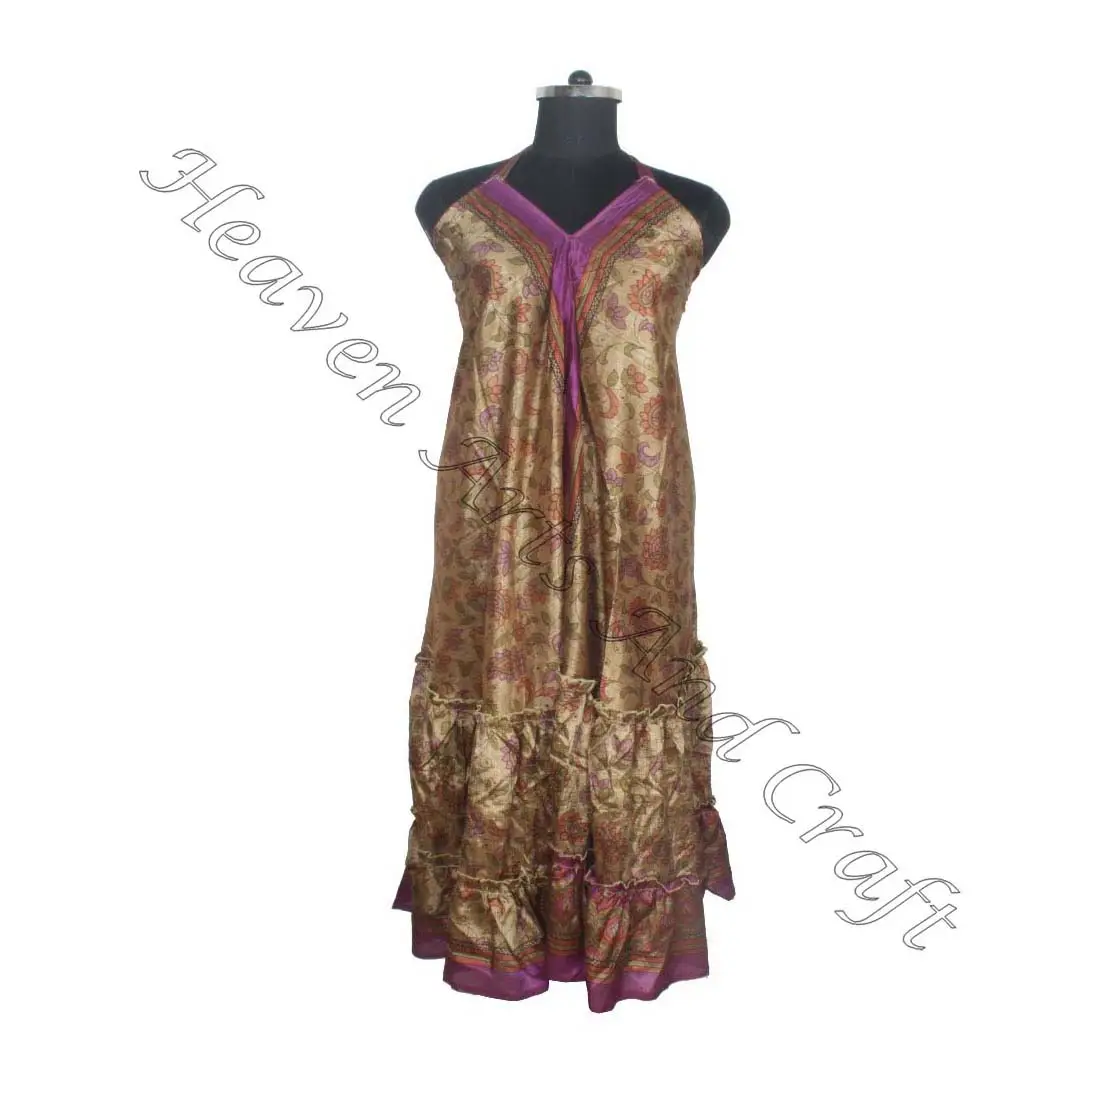 SD013 Saree / Sari / Shari Indian & Pakistani Clothing from India Hippy Boho Latest Traditional Long V-Neck Indian Vintage Sari